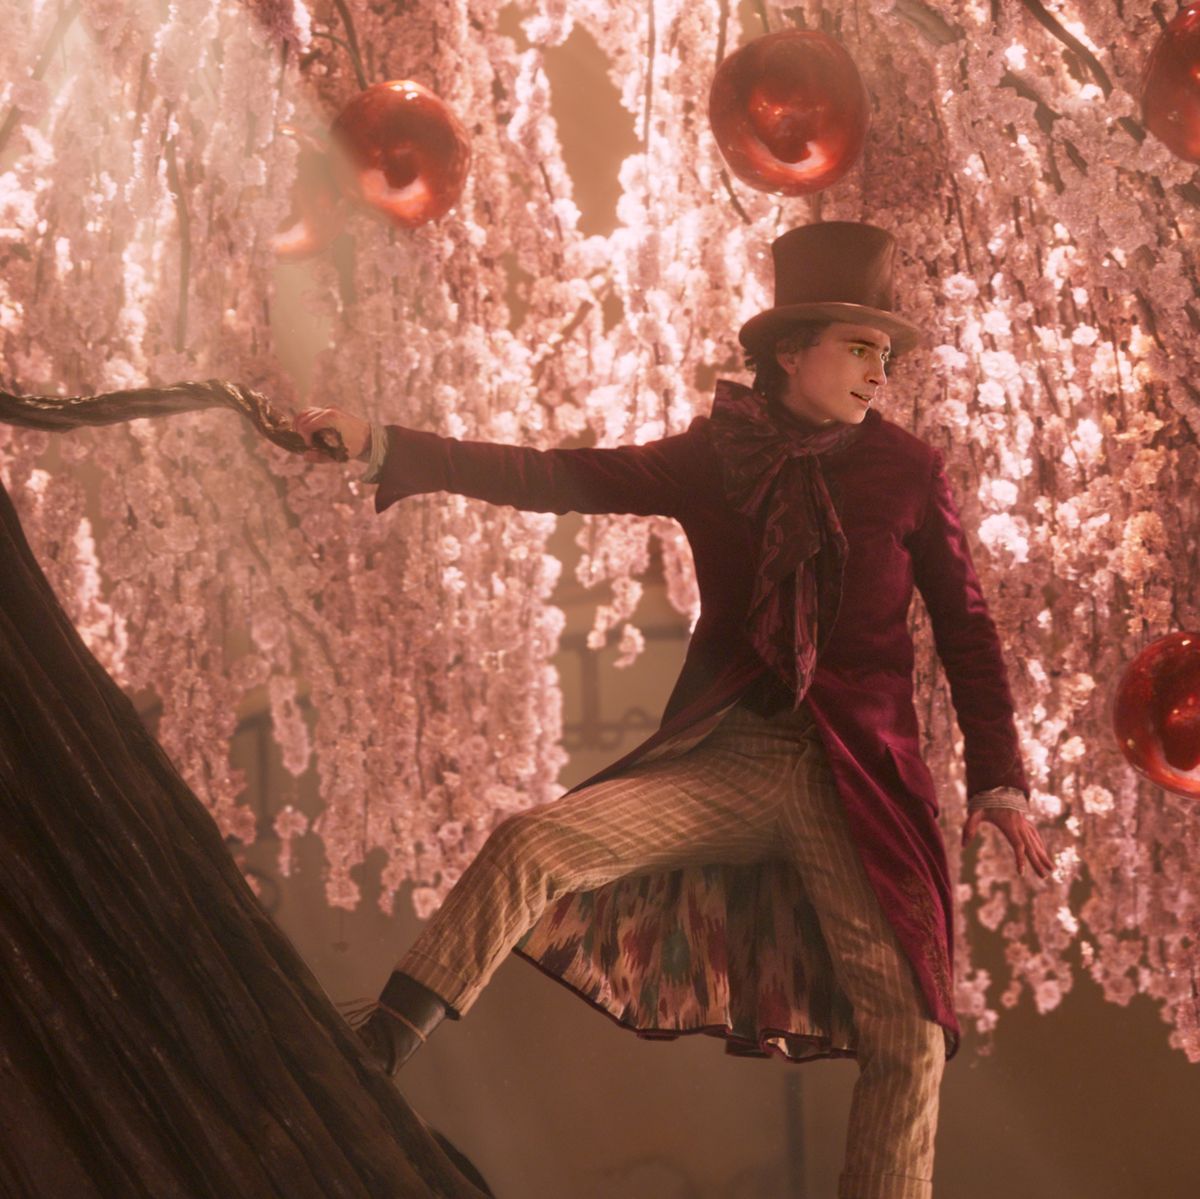 Wonka trailer: Timothée Chalamet reveals take on Roald Dahl's chocolatier